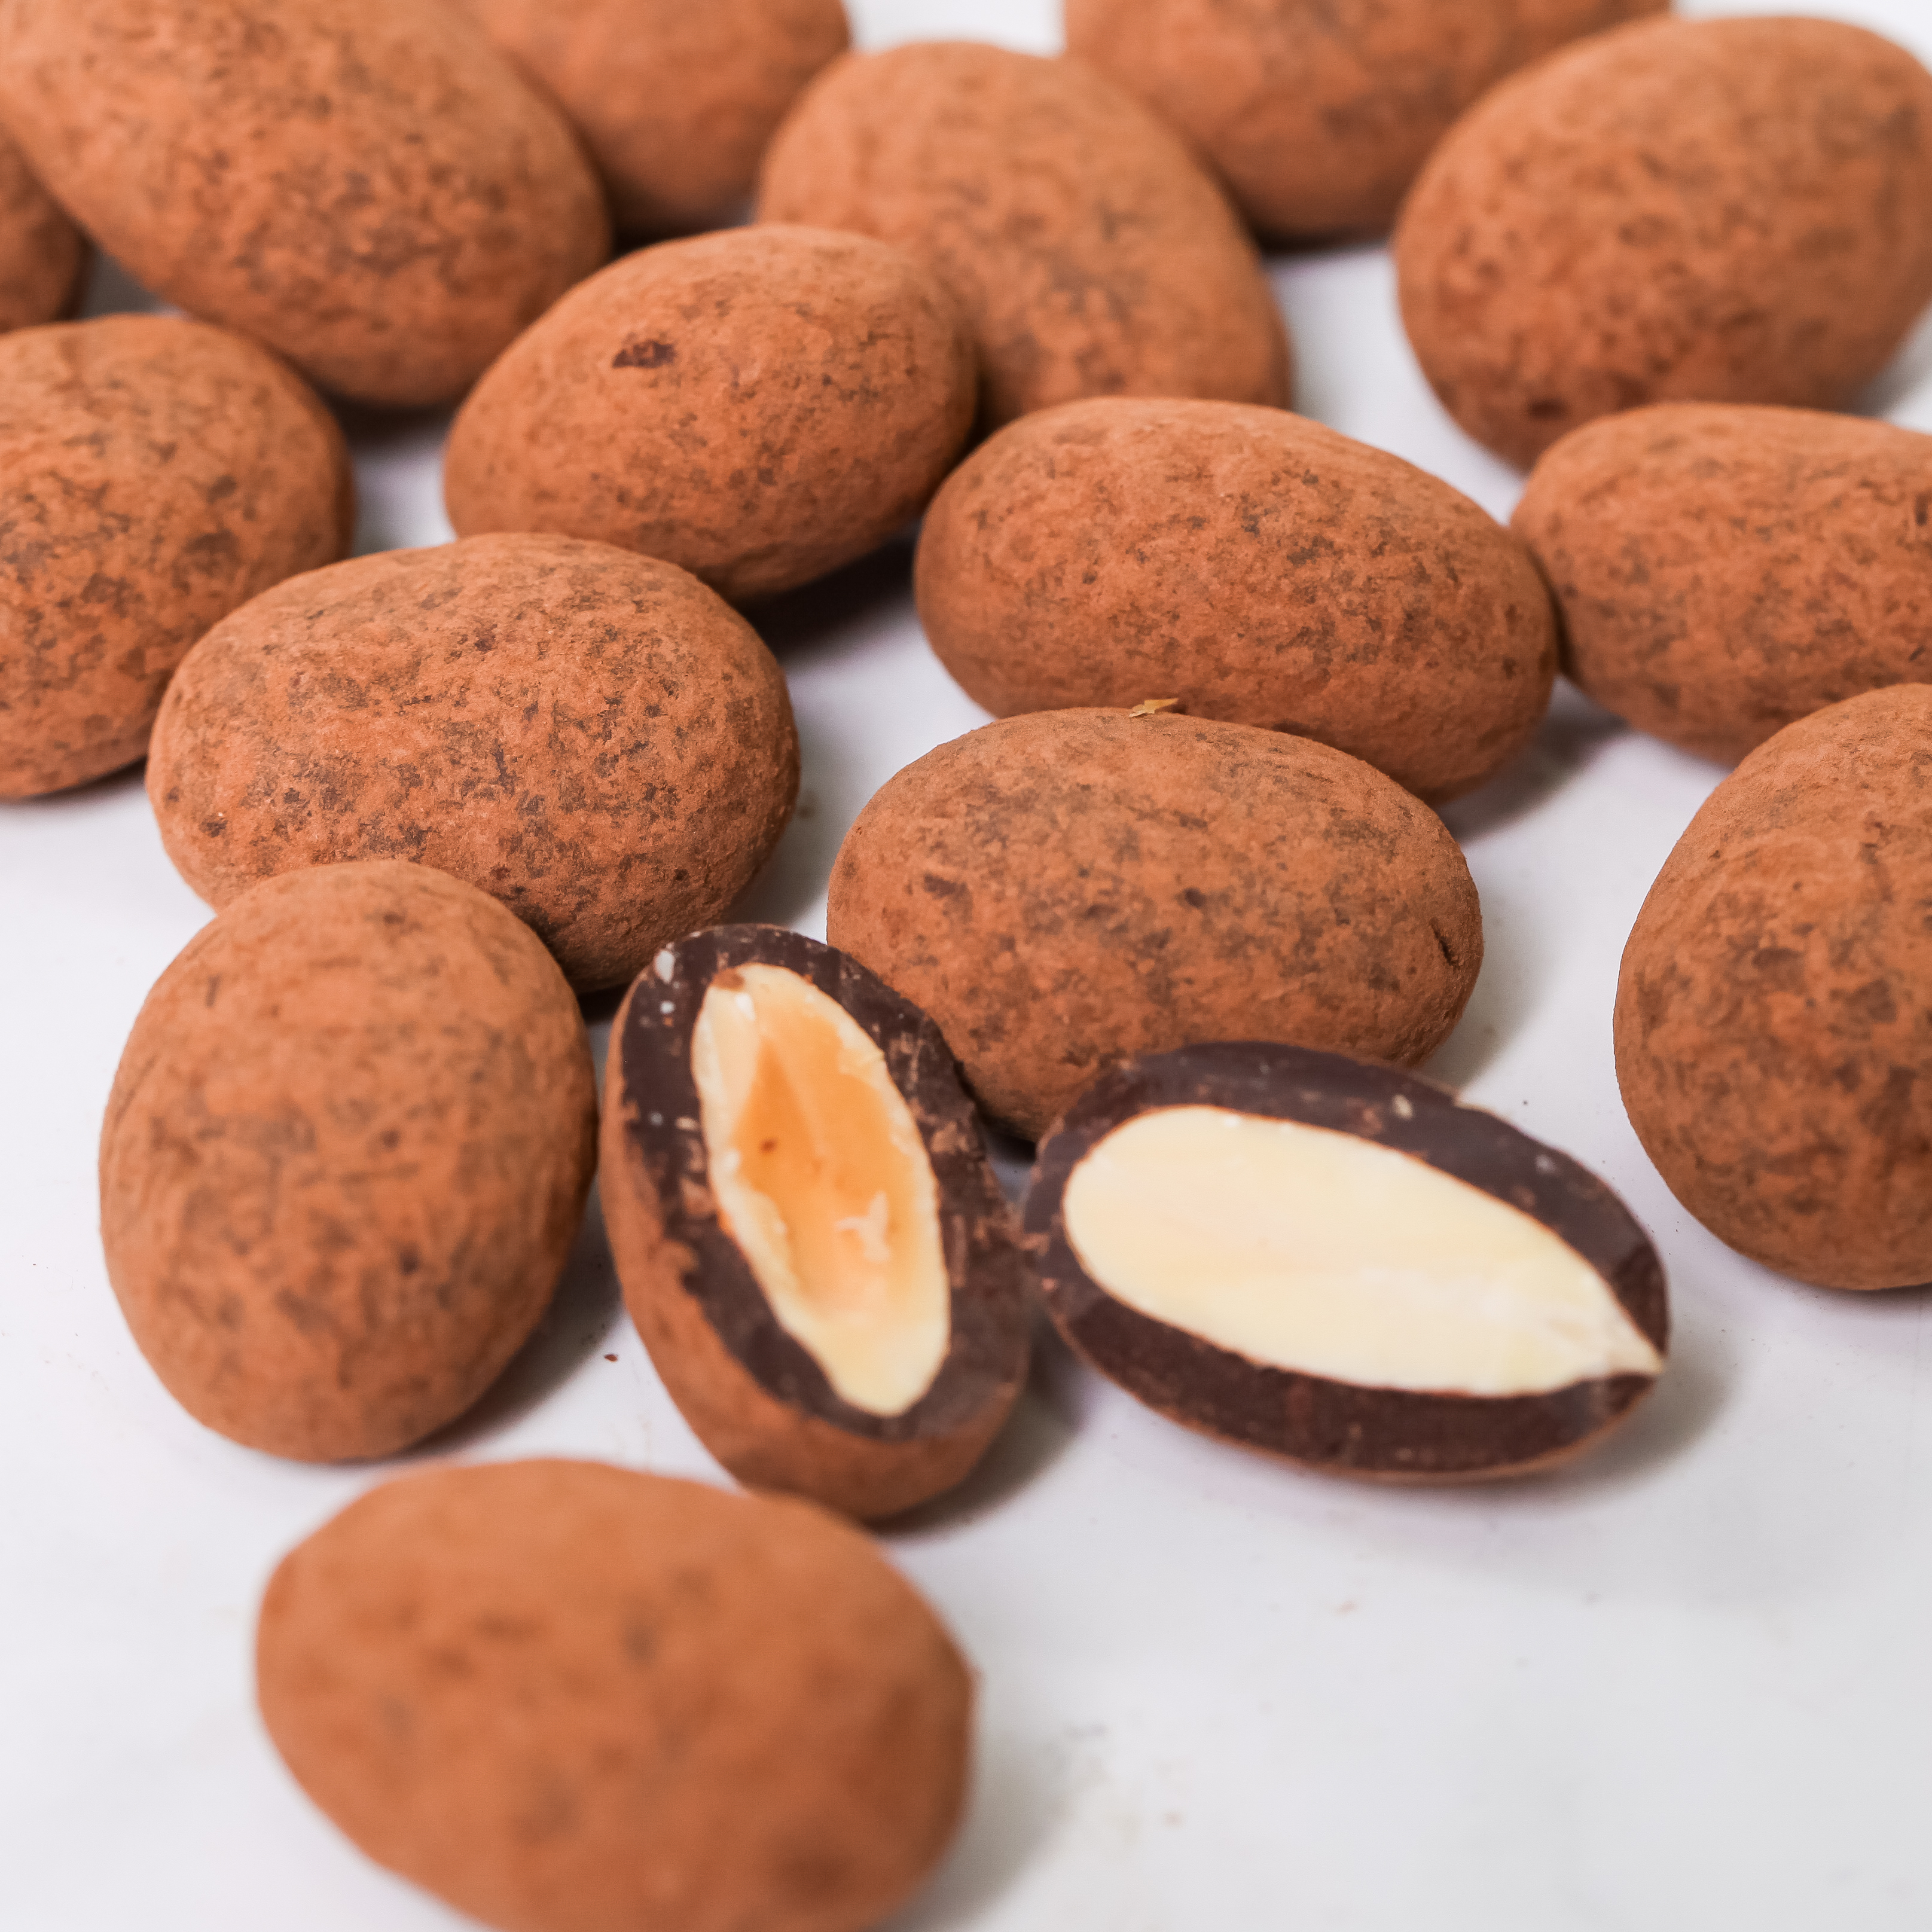 70% Dark Chocolate Coated Almonds